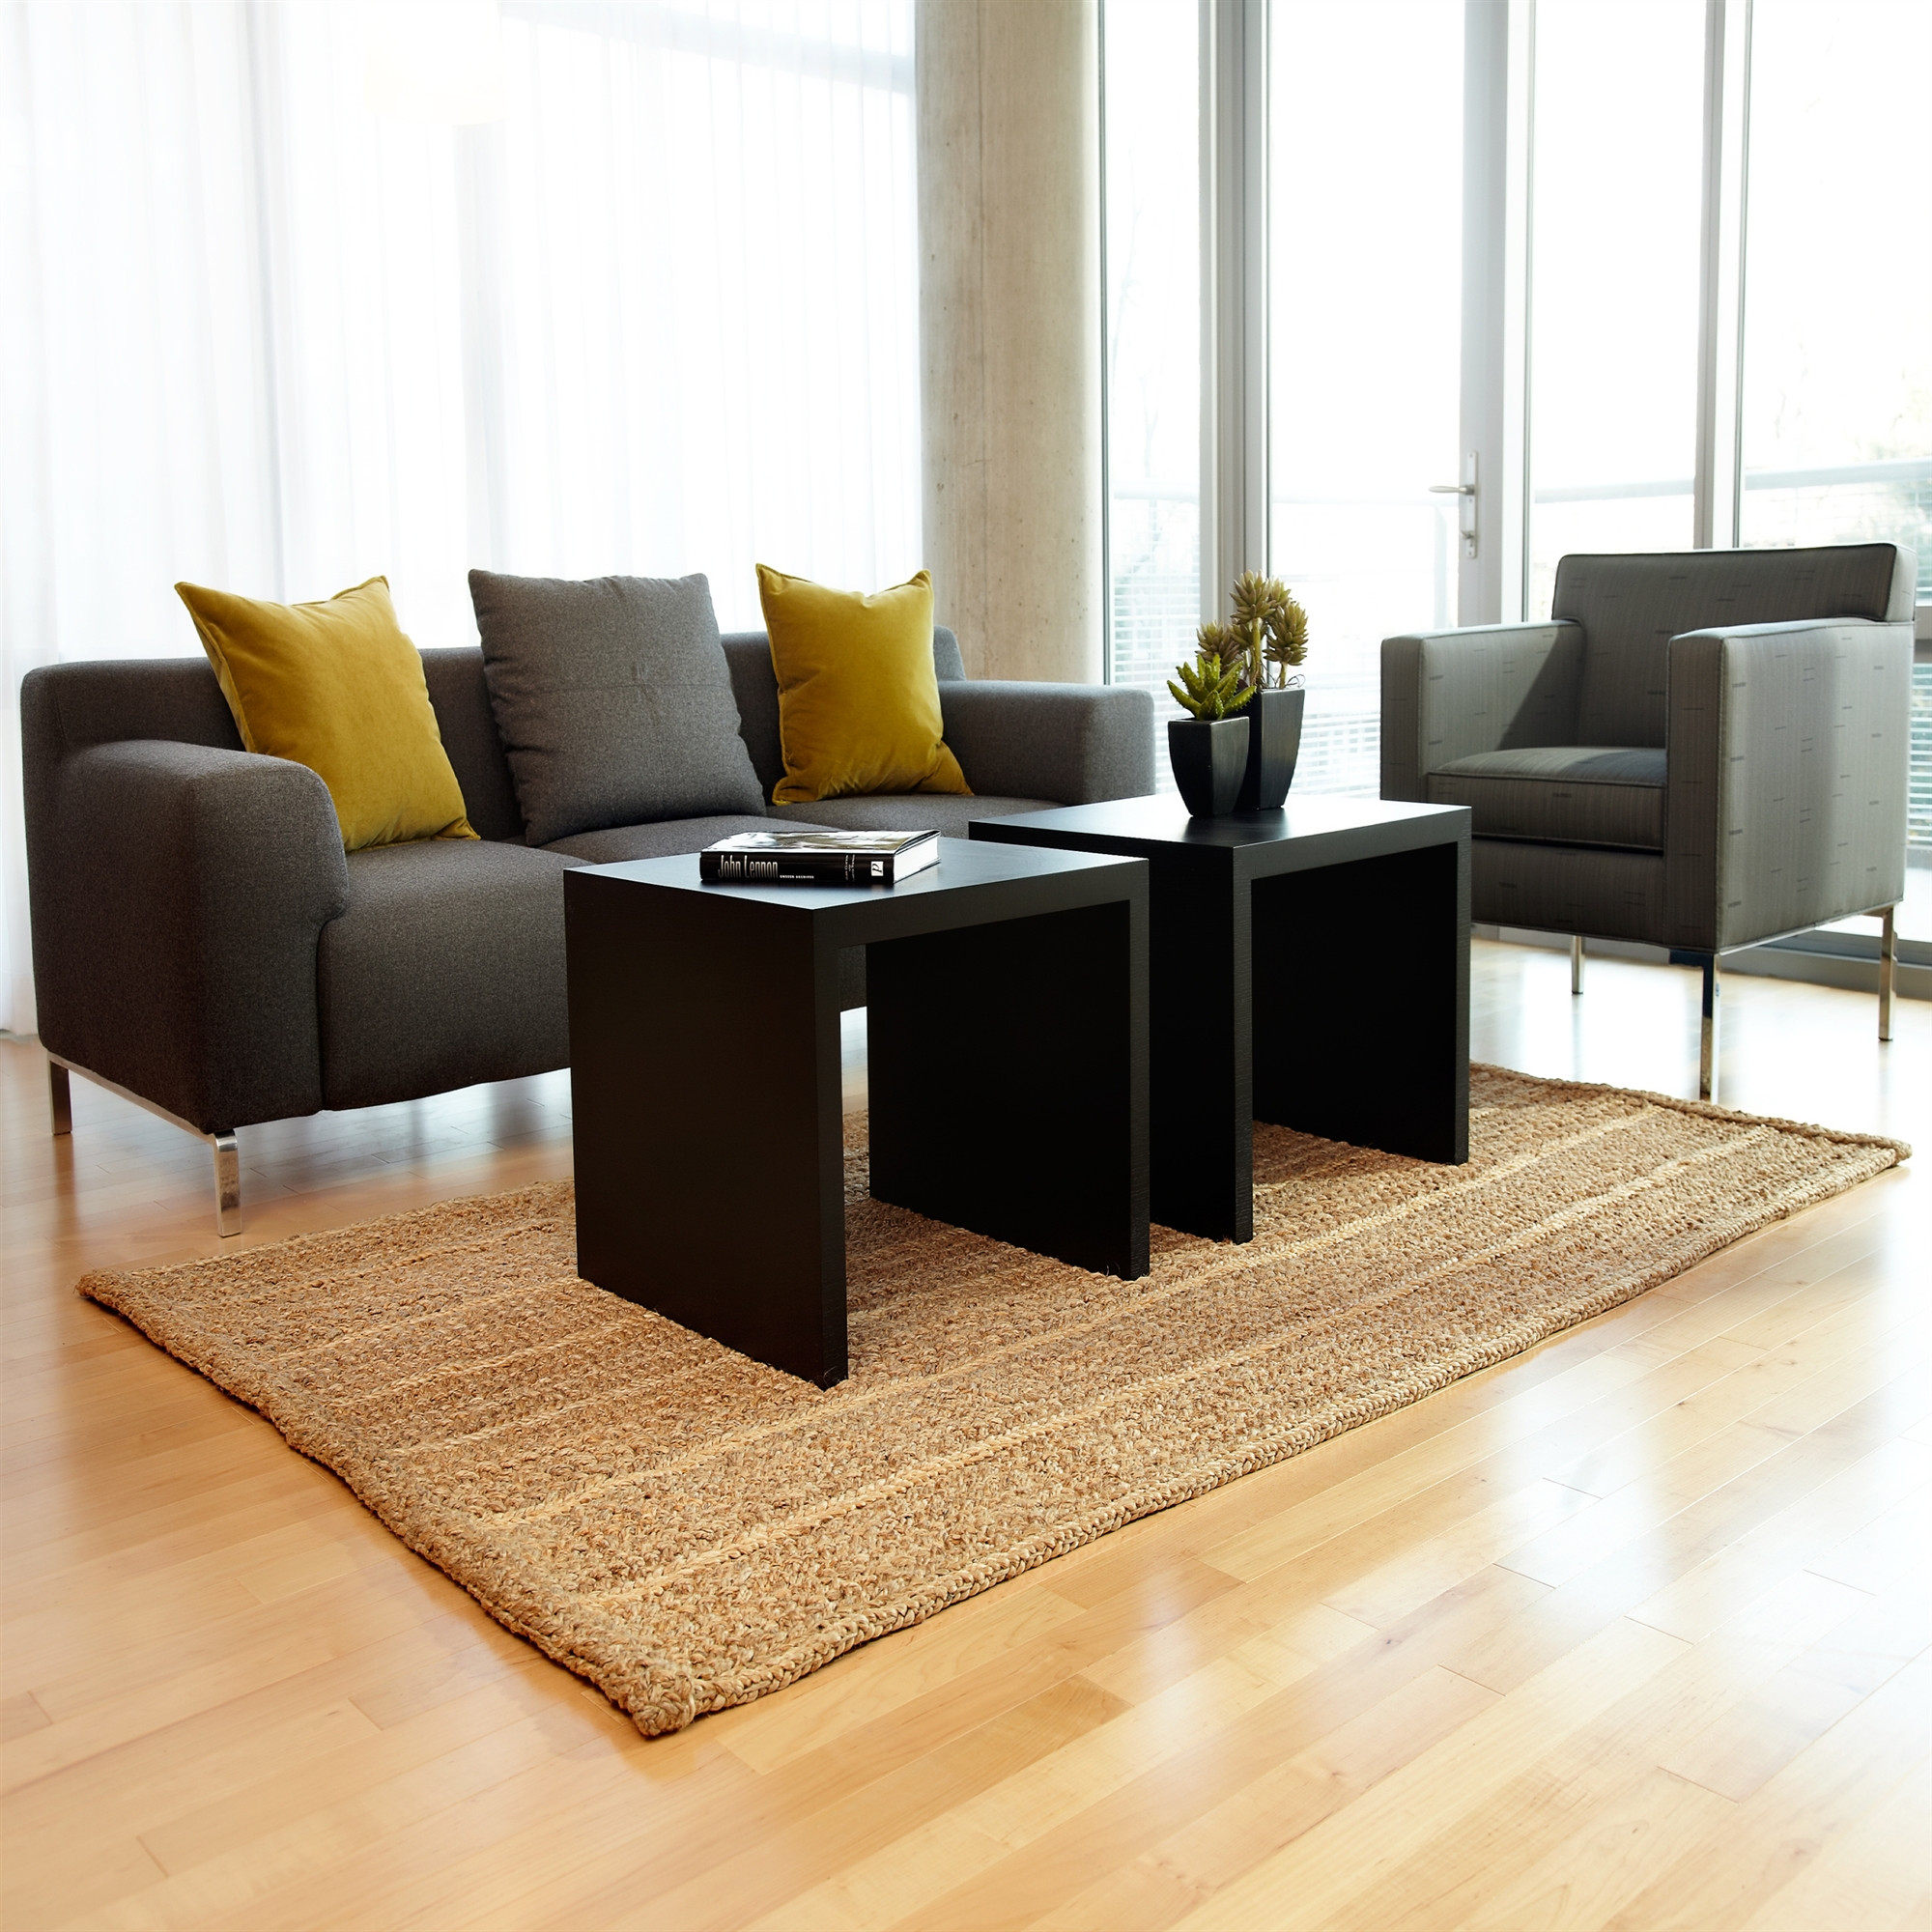 Living Room Rugs Ikea
 Sisal Rugs Ikea Natural Beauty and Benefits – HomesFeed